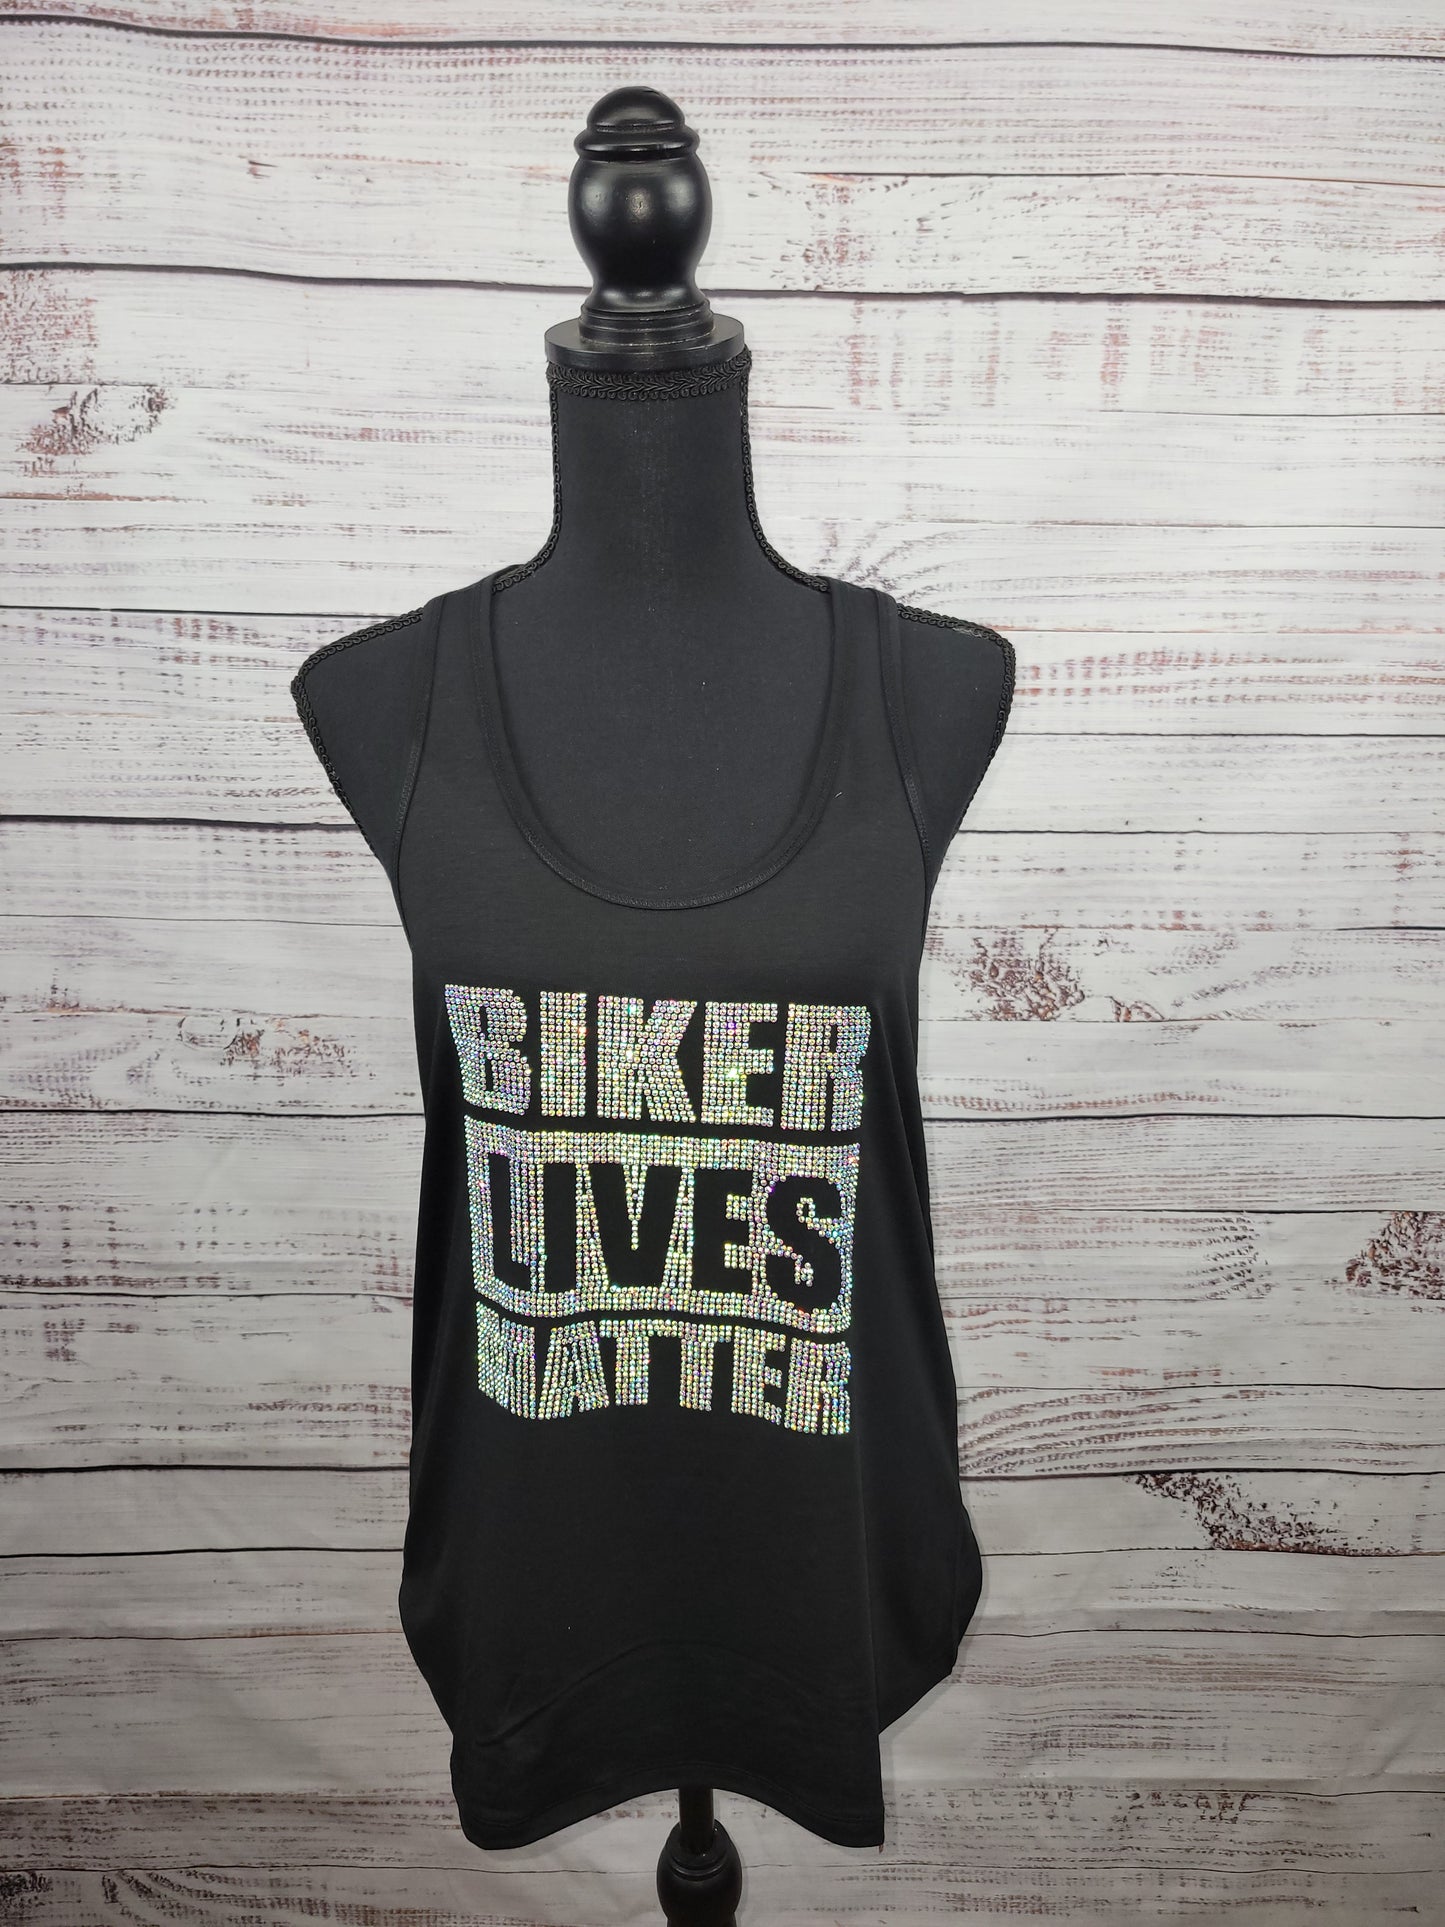 Biker Lives Matter Rhinestone Racerback Tank Top